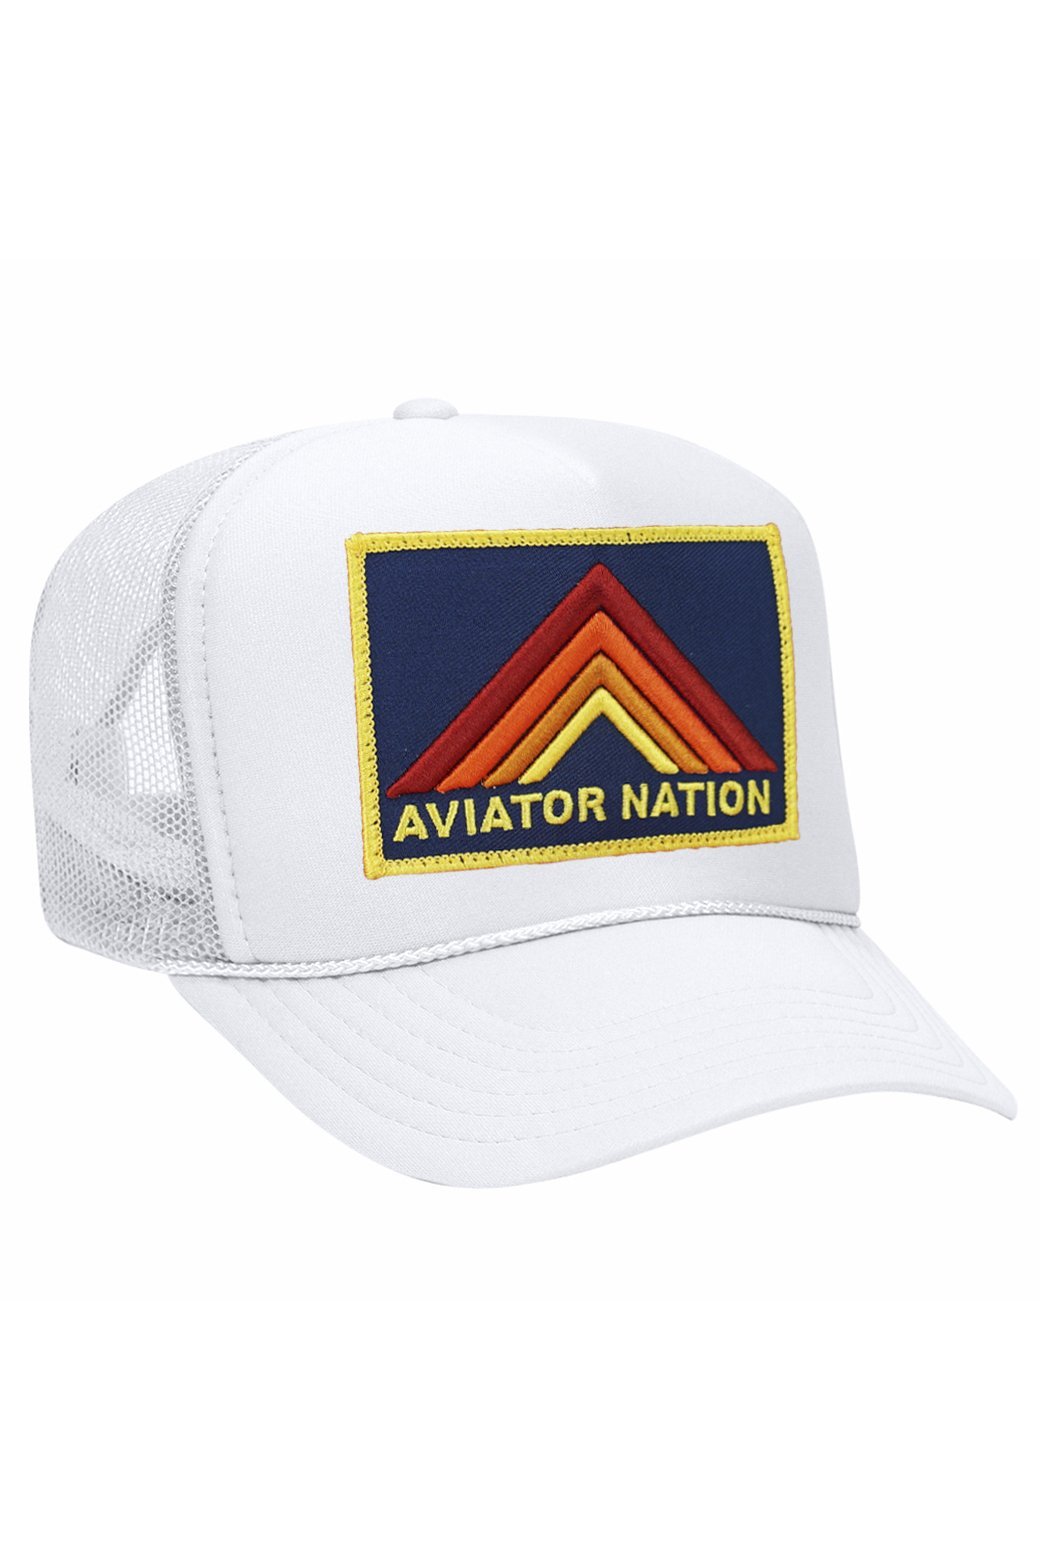 MOUNTAIN STRIPE VINTAGE TRUCKER HAT HATS Aviator Nation OS WHITE 